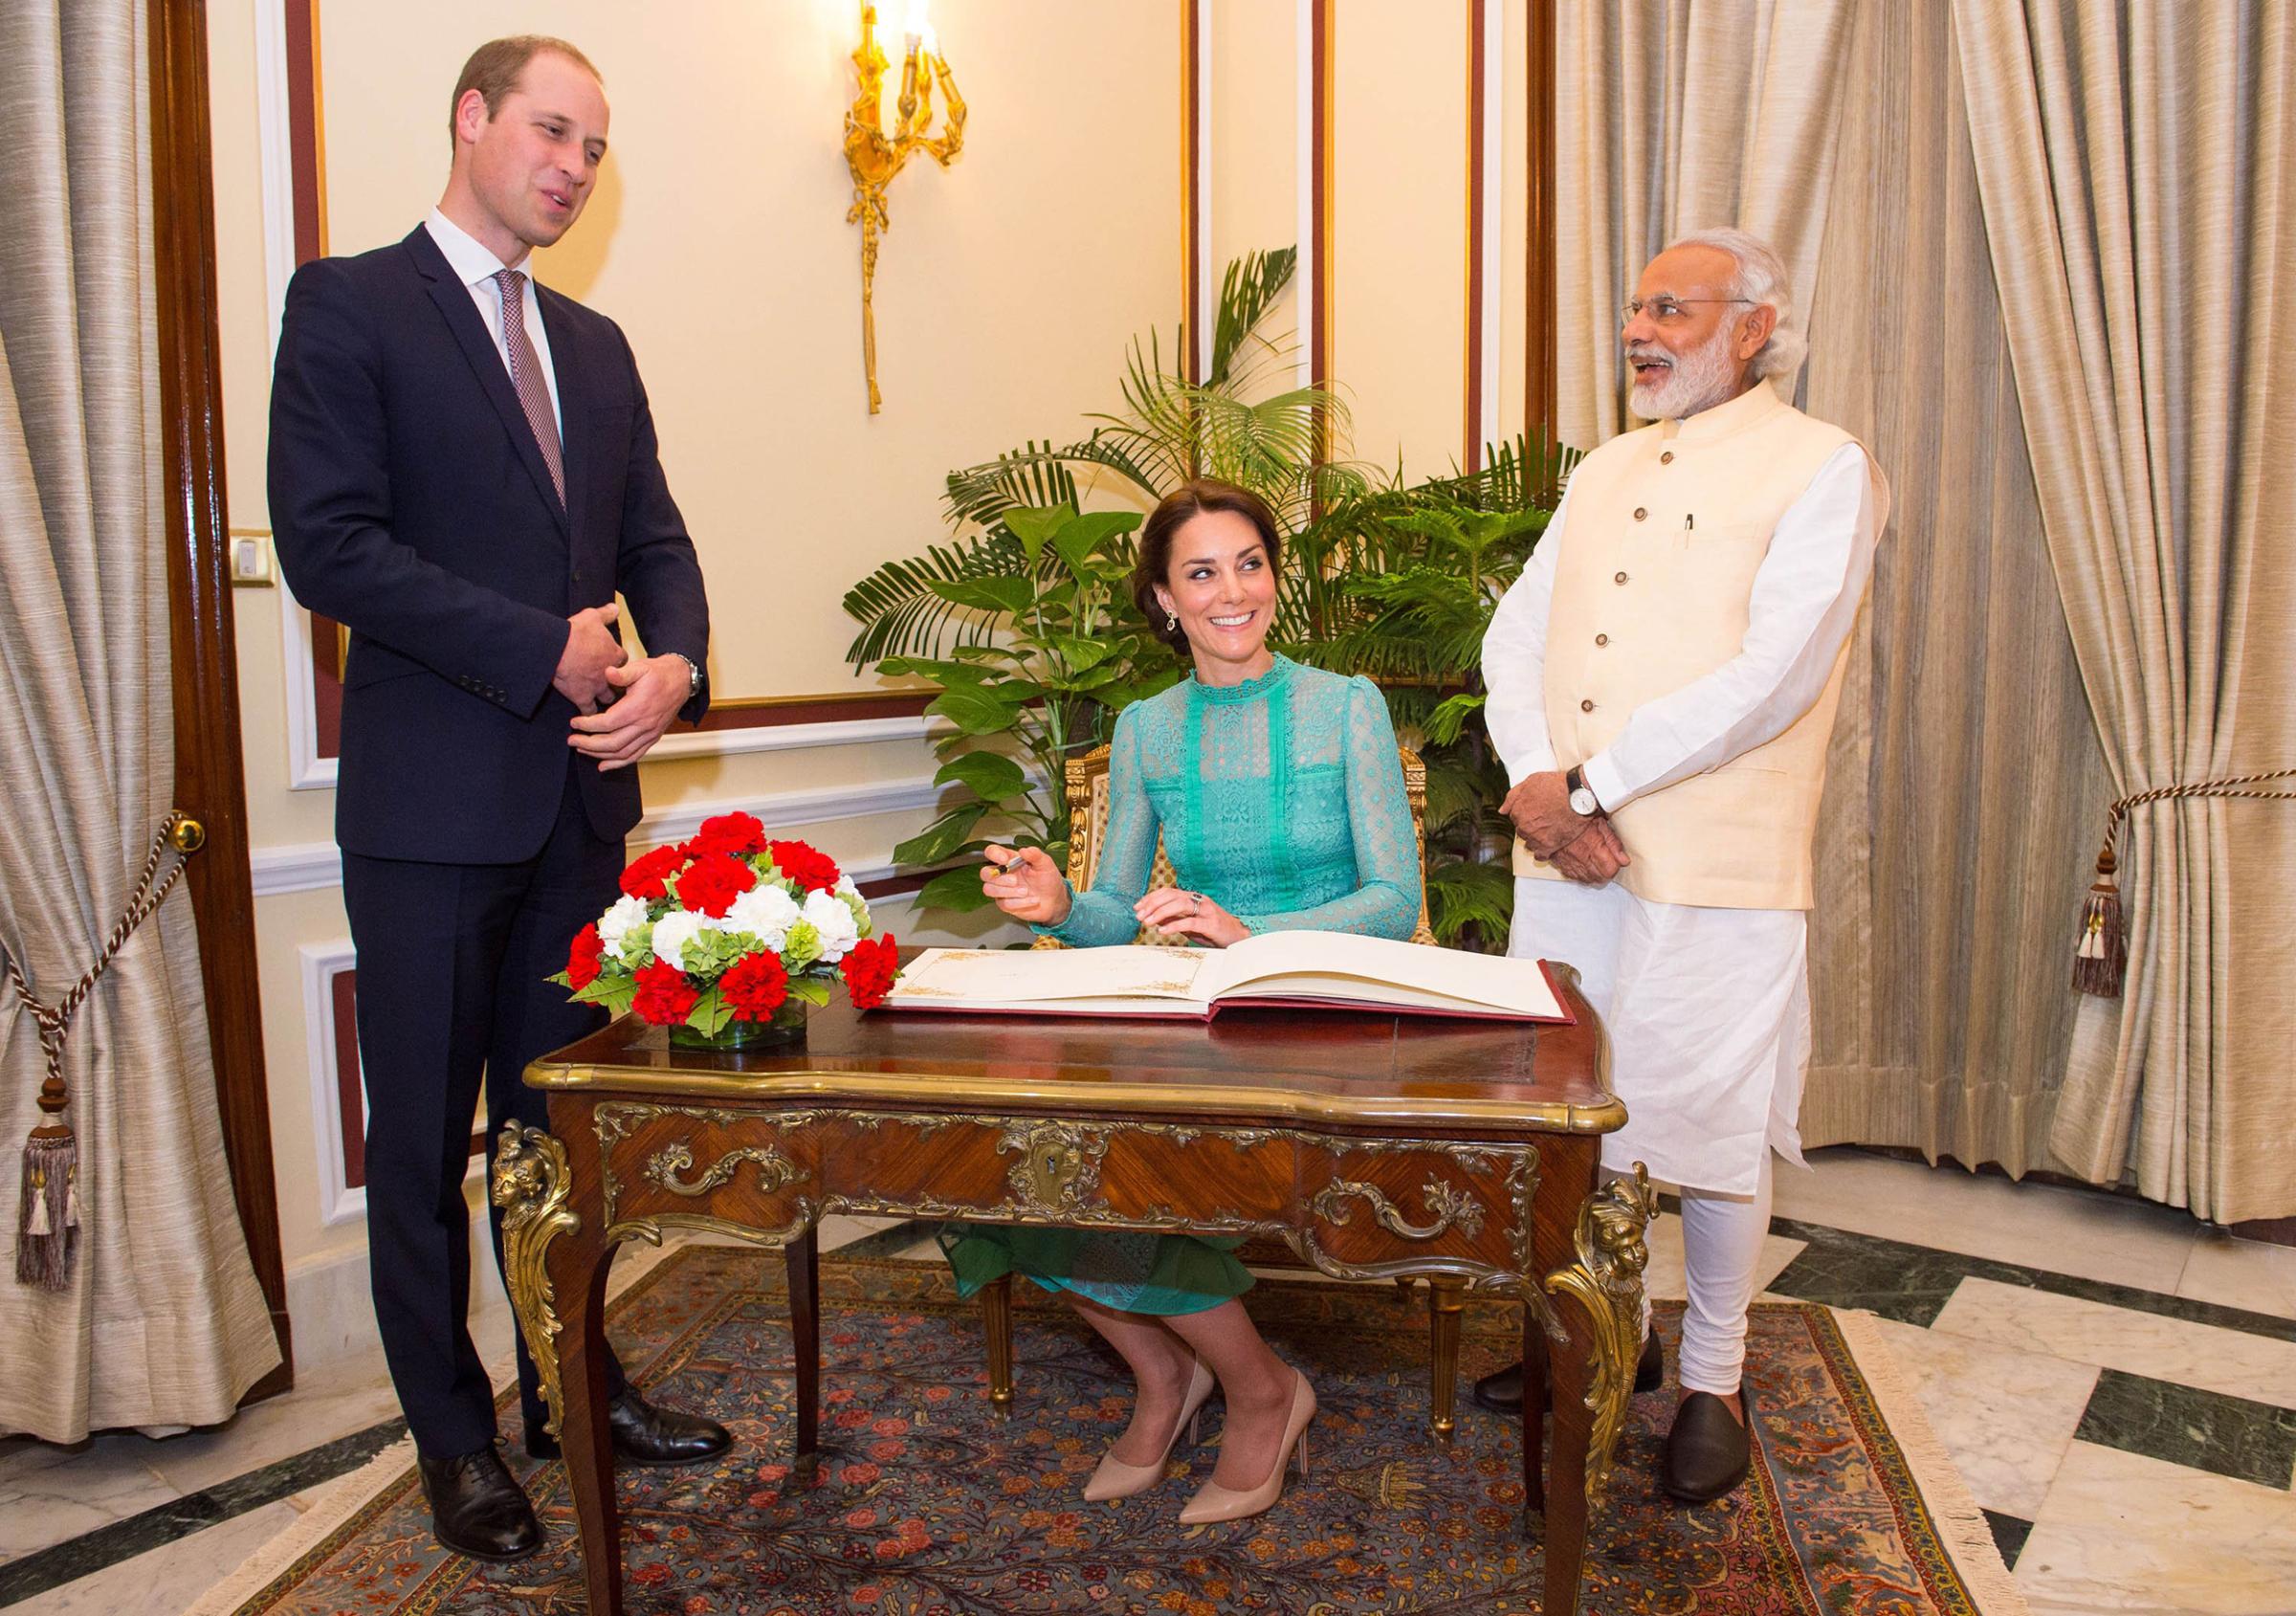 Catherine, Duchess of Cambridge and Prince William, Duke of Cambridge meet Prime Minister of India Narenda Modi in New Delhi's Hyderabad House in New Dehli, India on April 12, 2016.